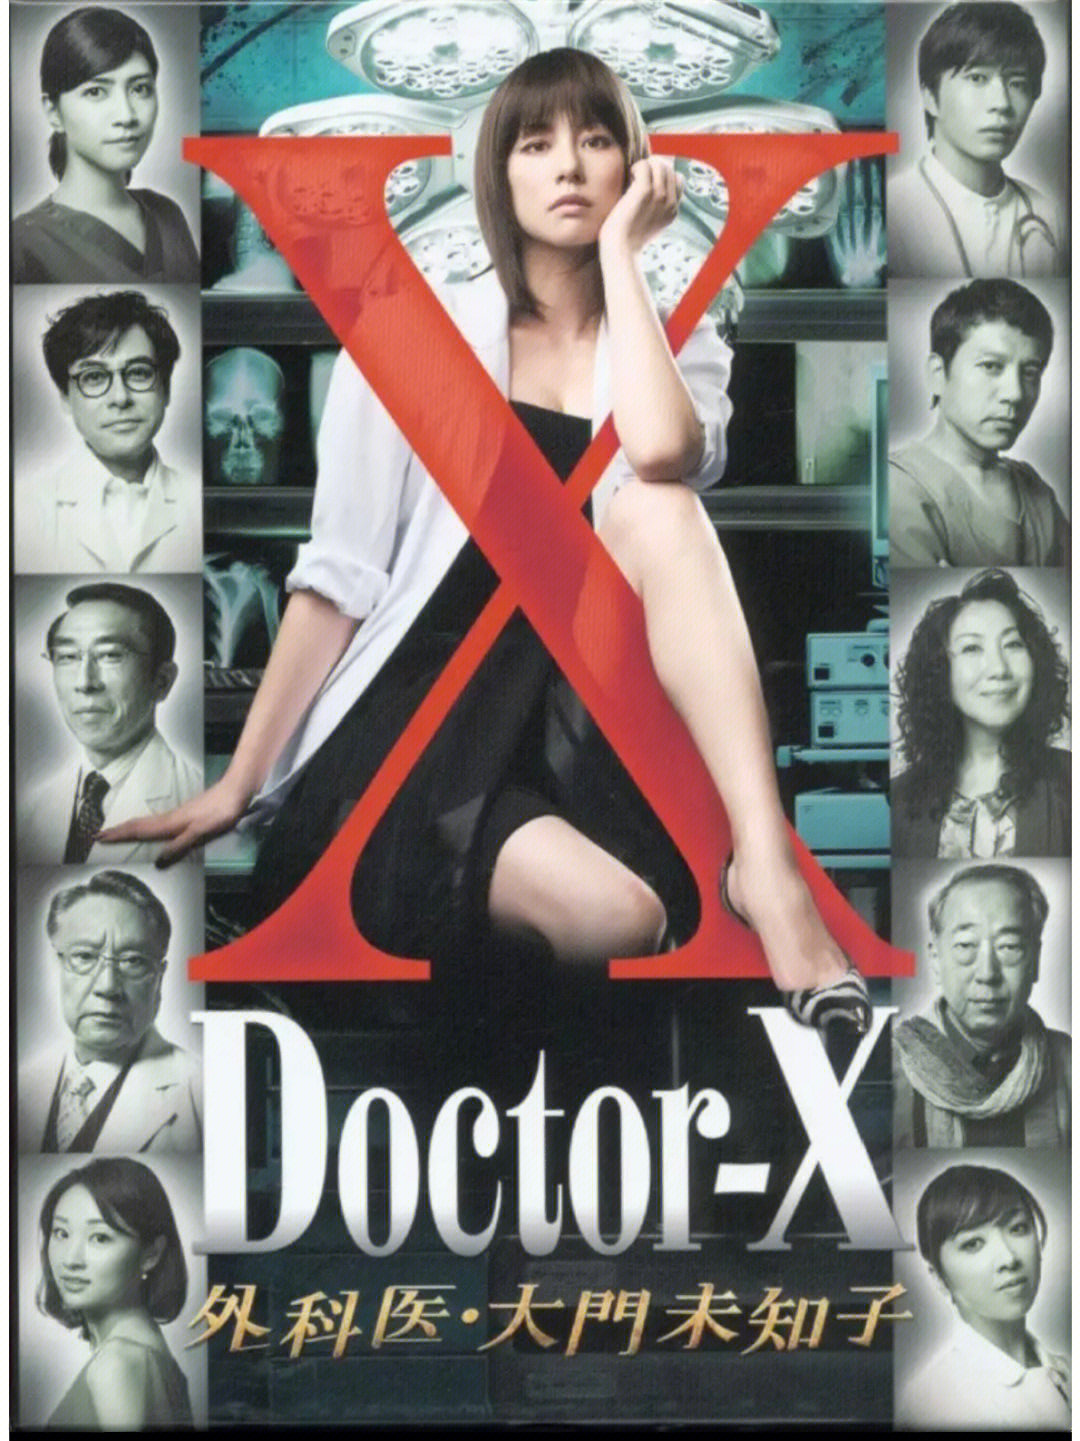 doctorx第7季图片